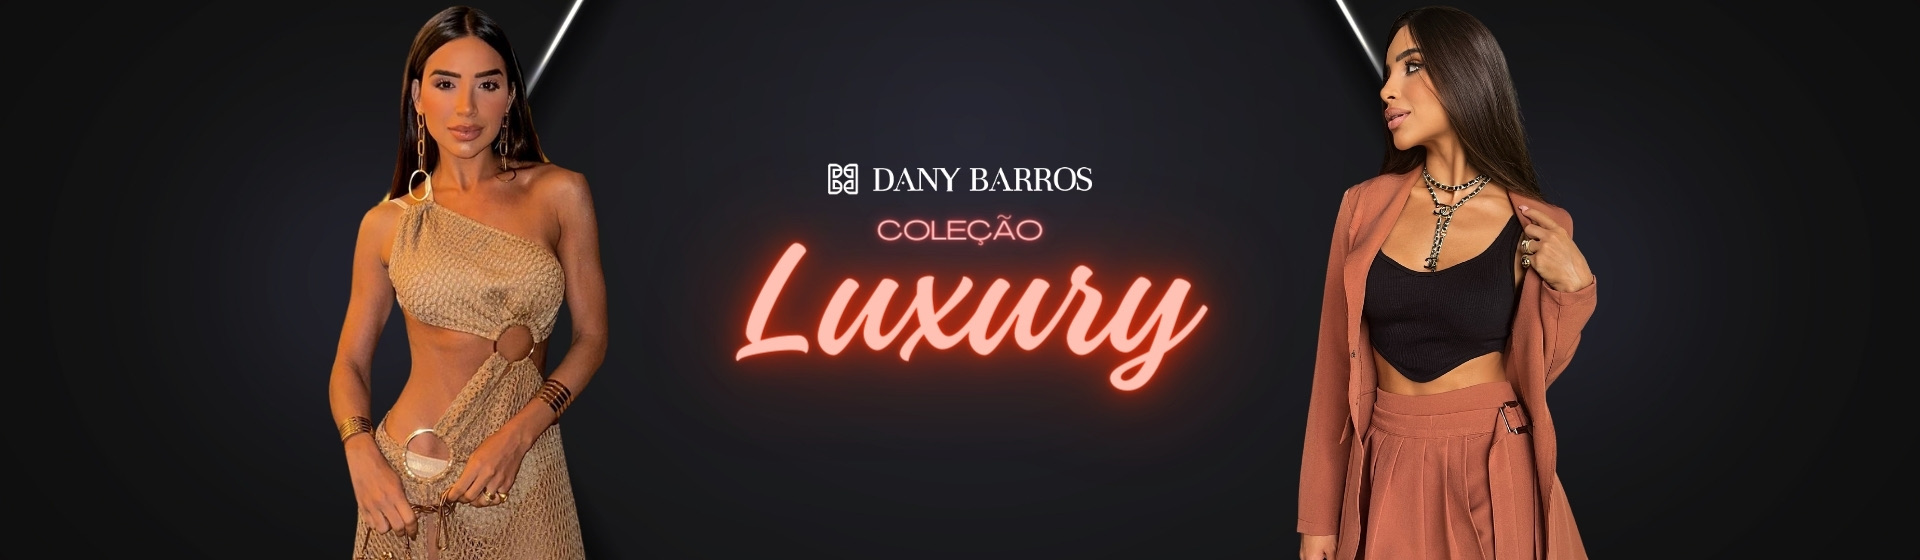 Dany Barros - Banner Desktop - 5